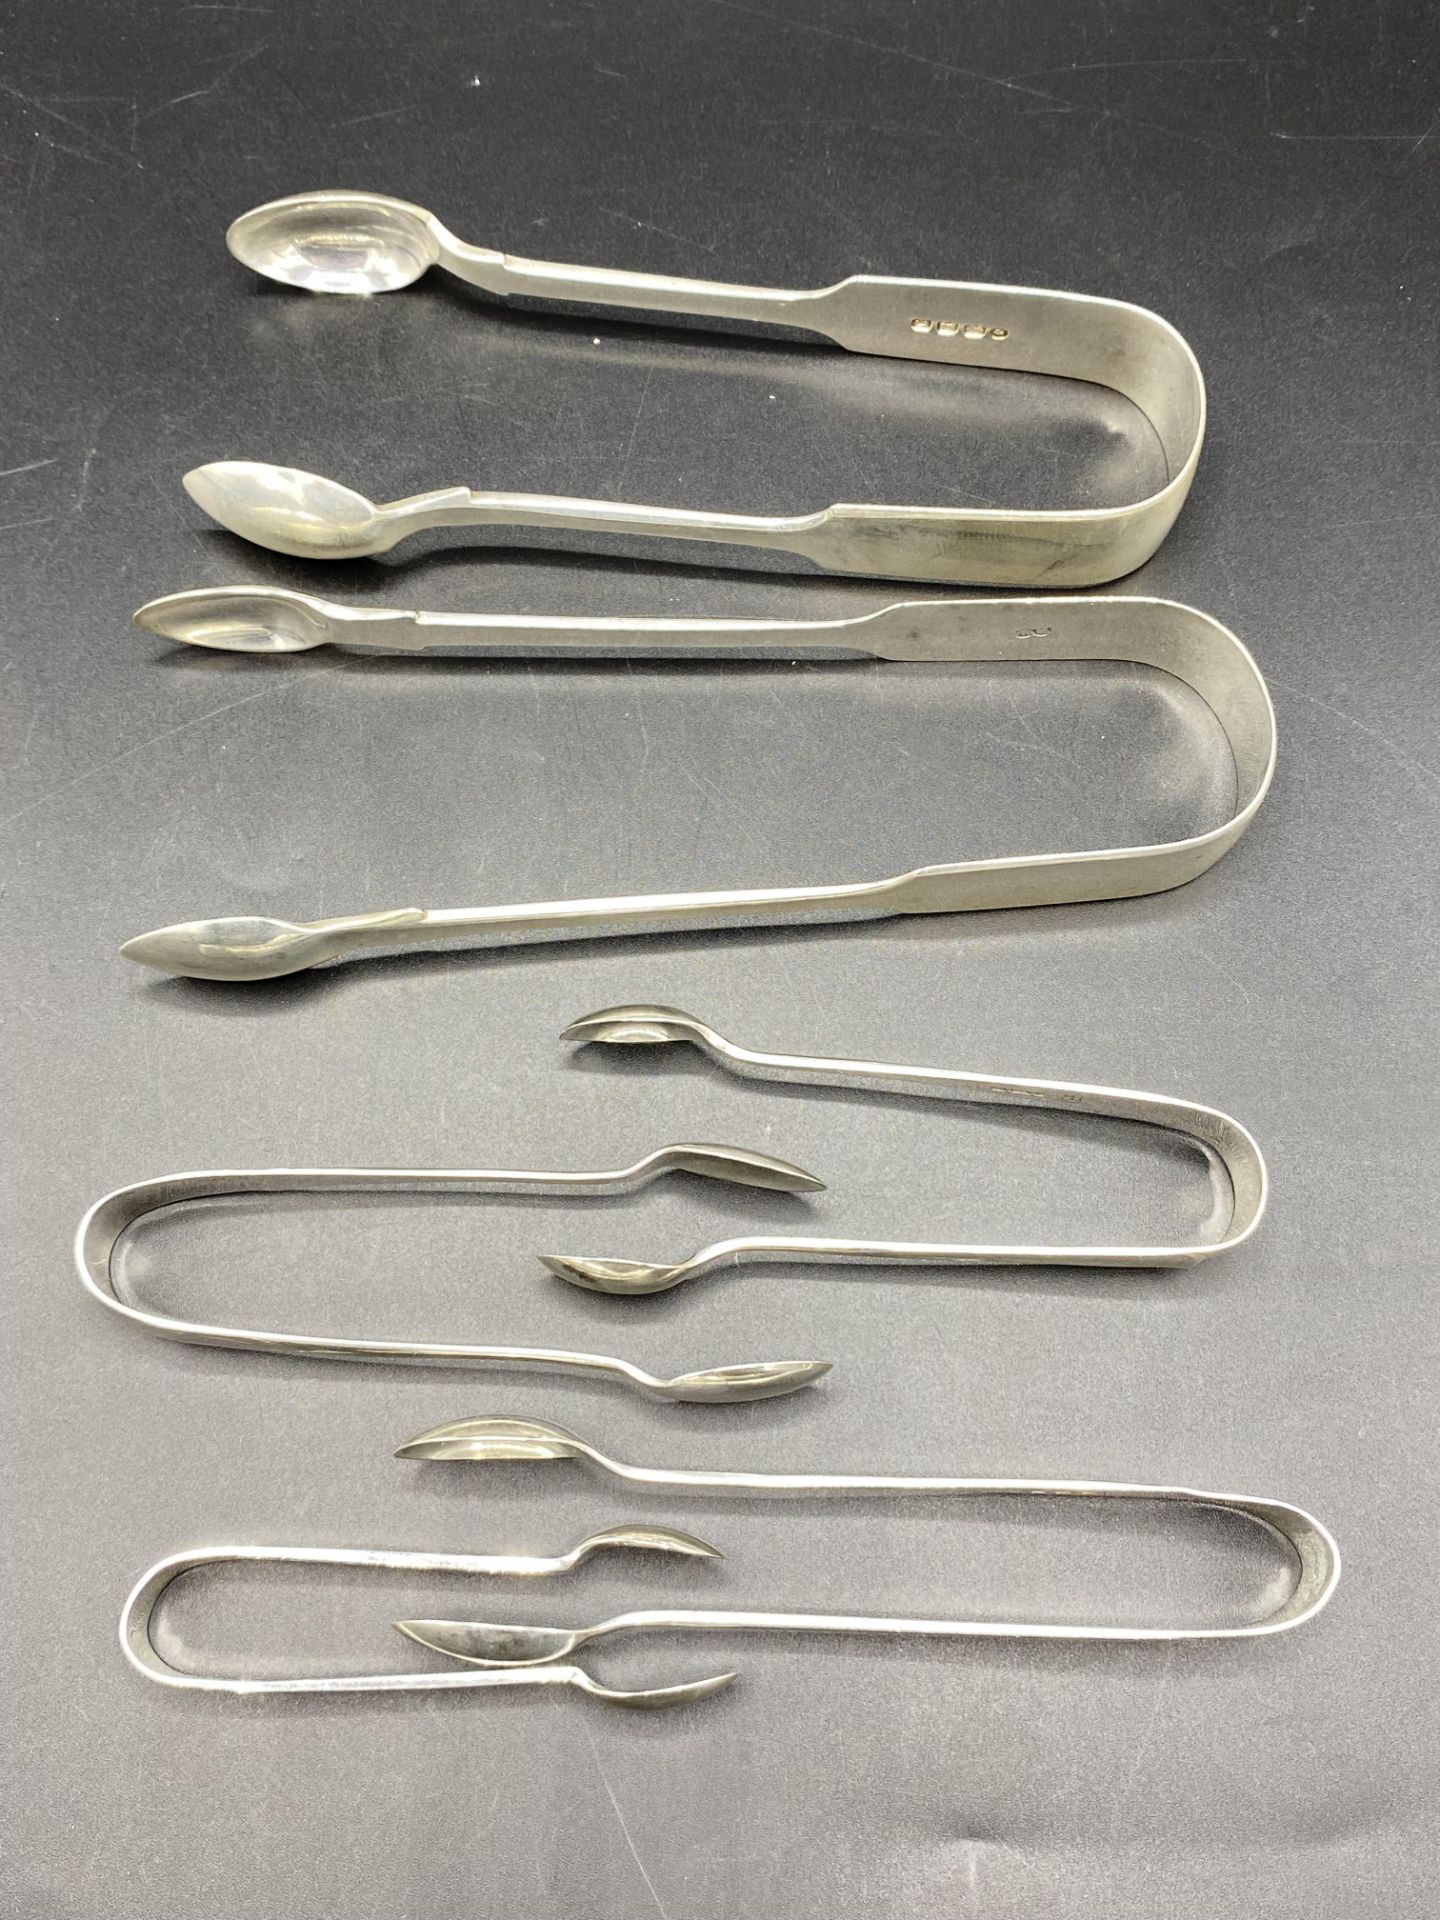 Six pair of silver sugar tongs - Image 2 of 3